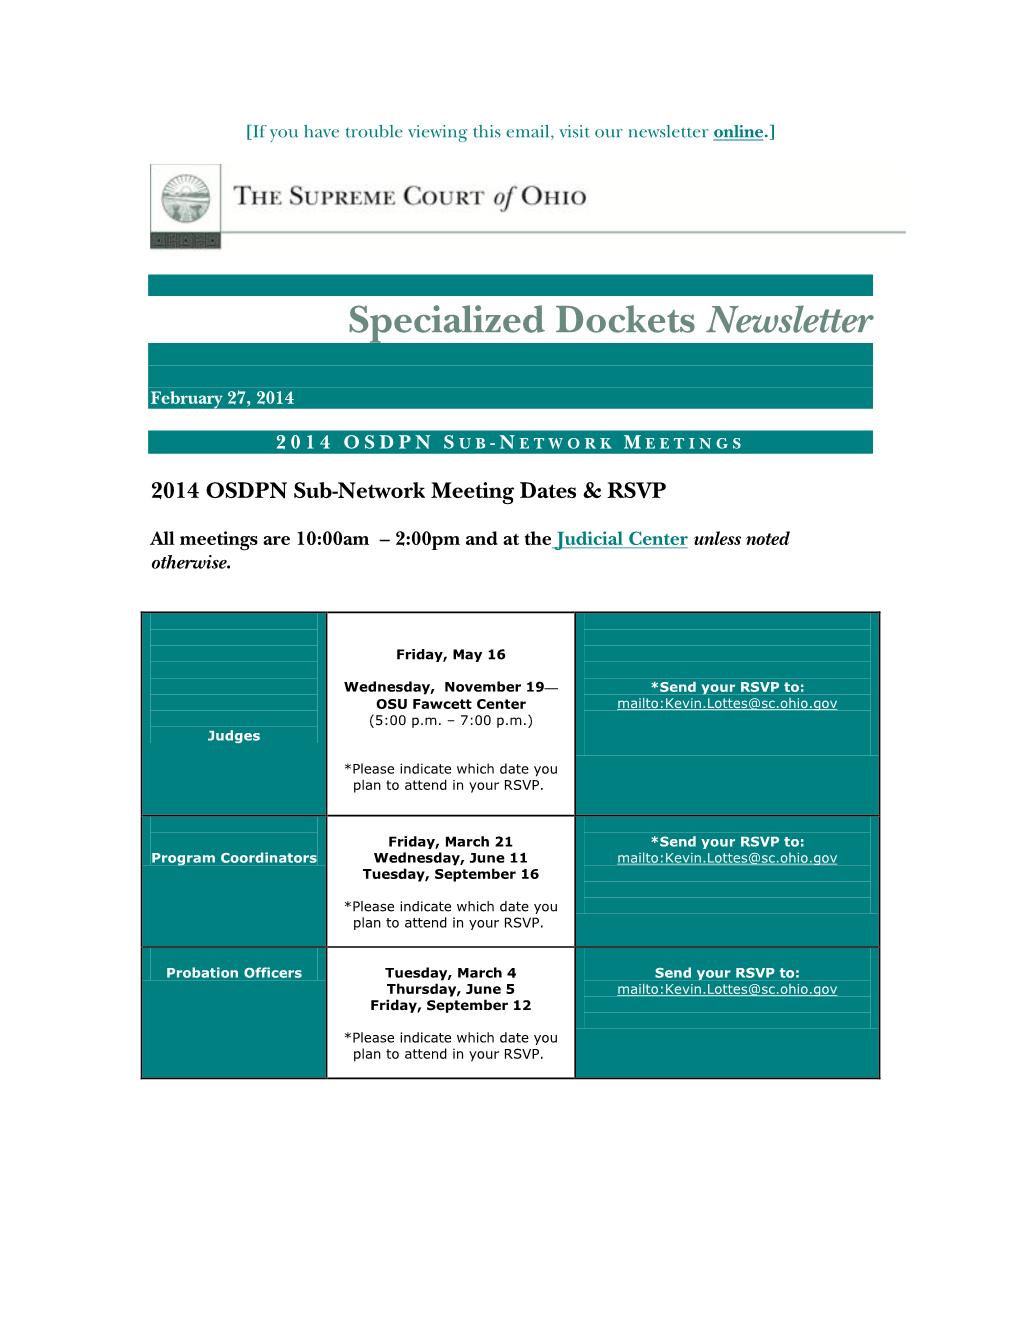 Specialized Dockets Newsletter